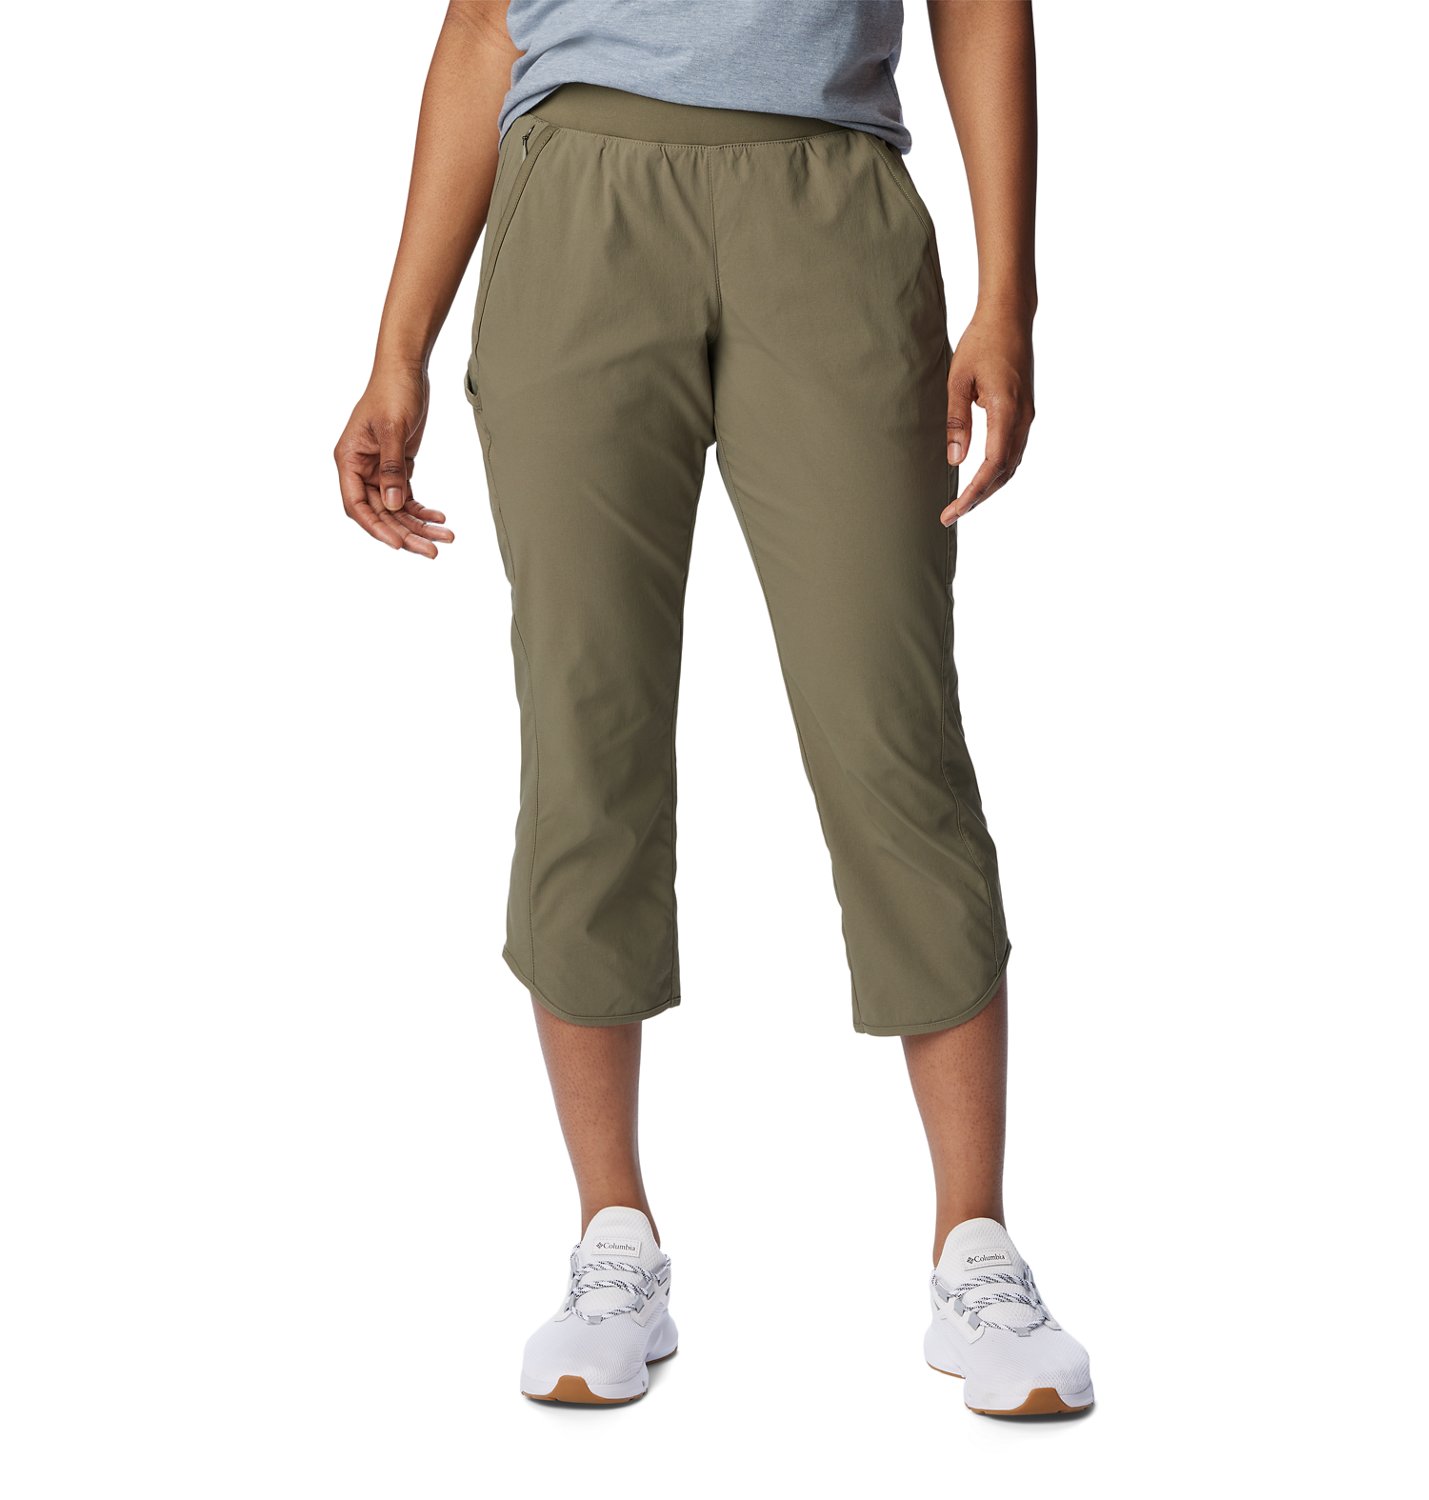 RIMLESS 7 Women's Capri Pants with Pockets Lounge Crop Yoga Pants